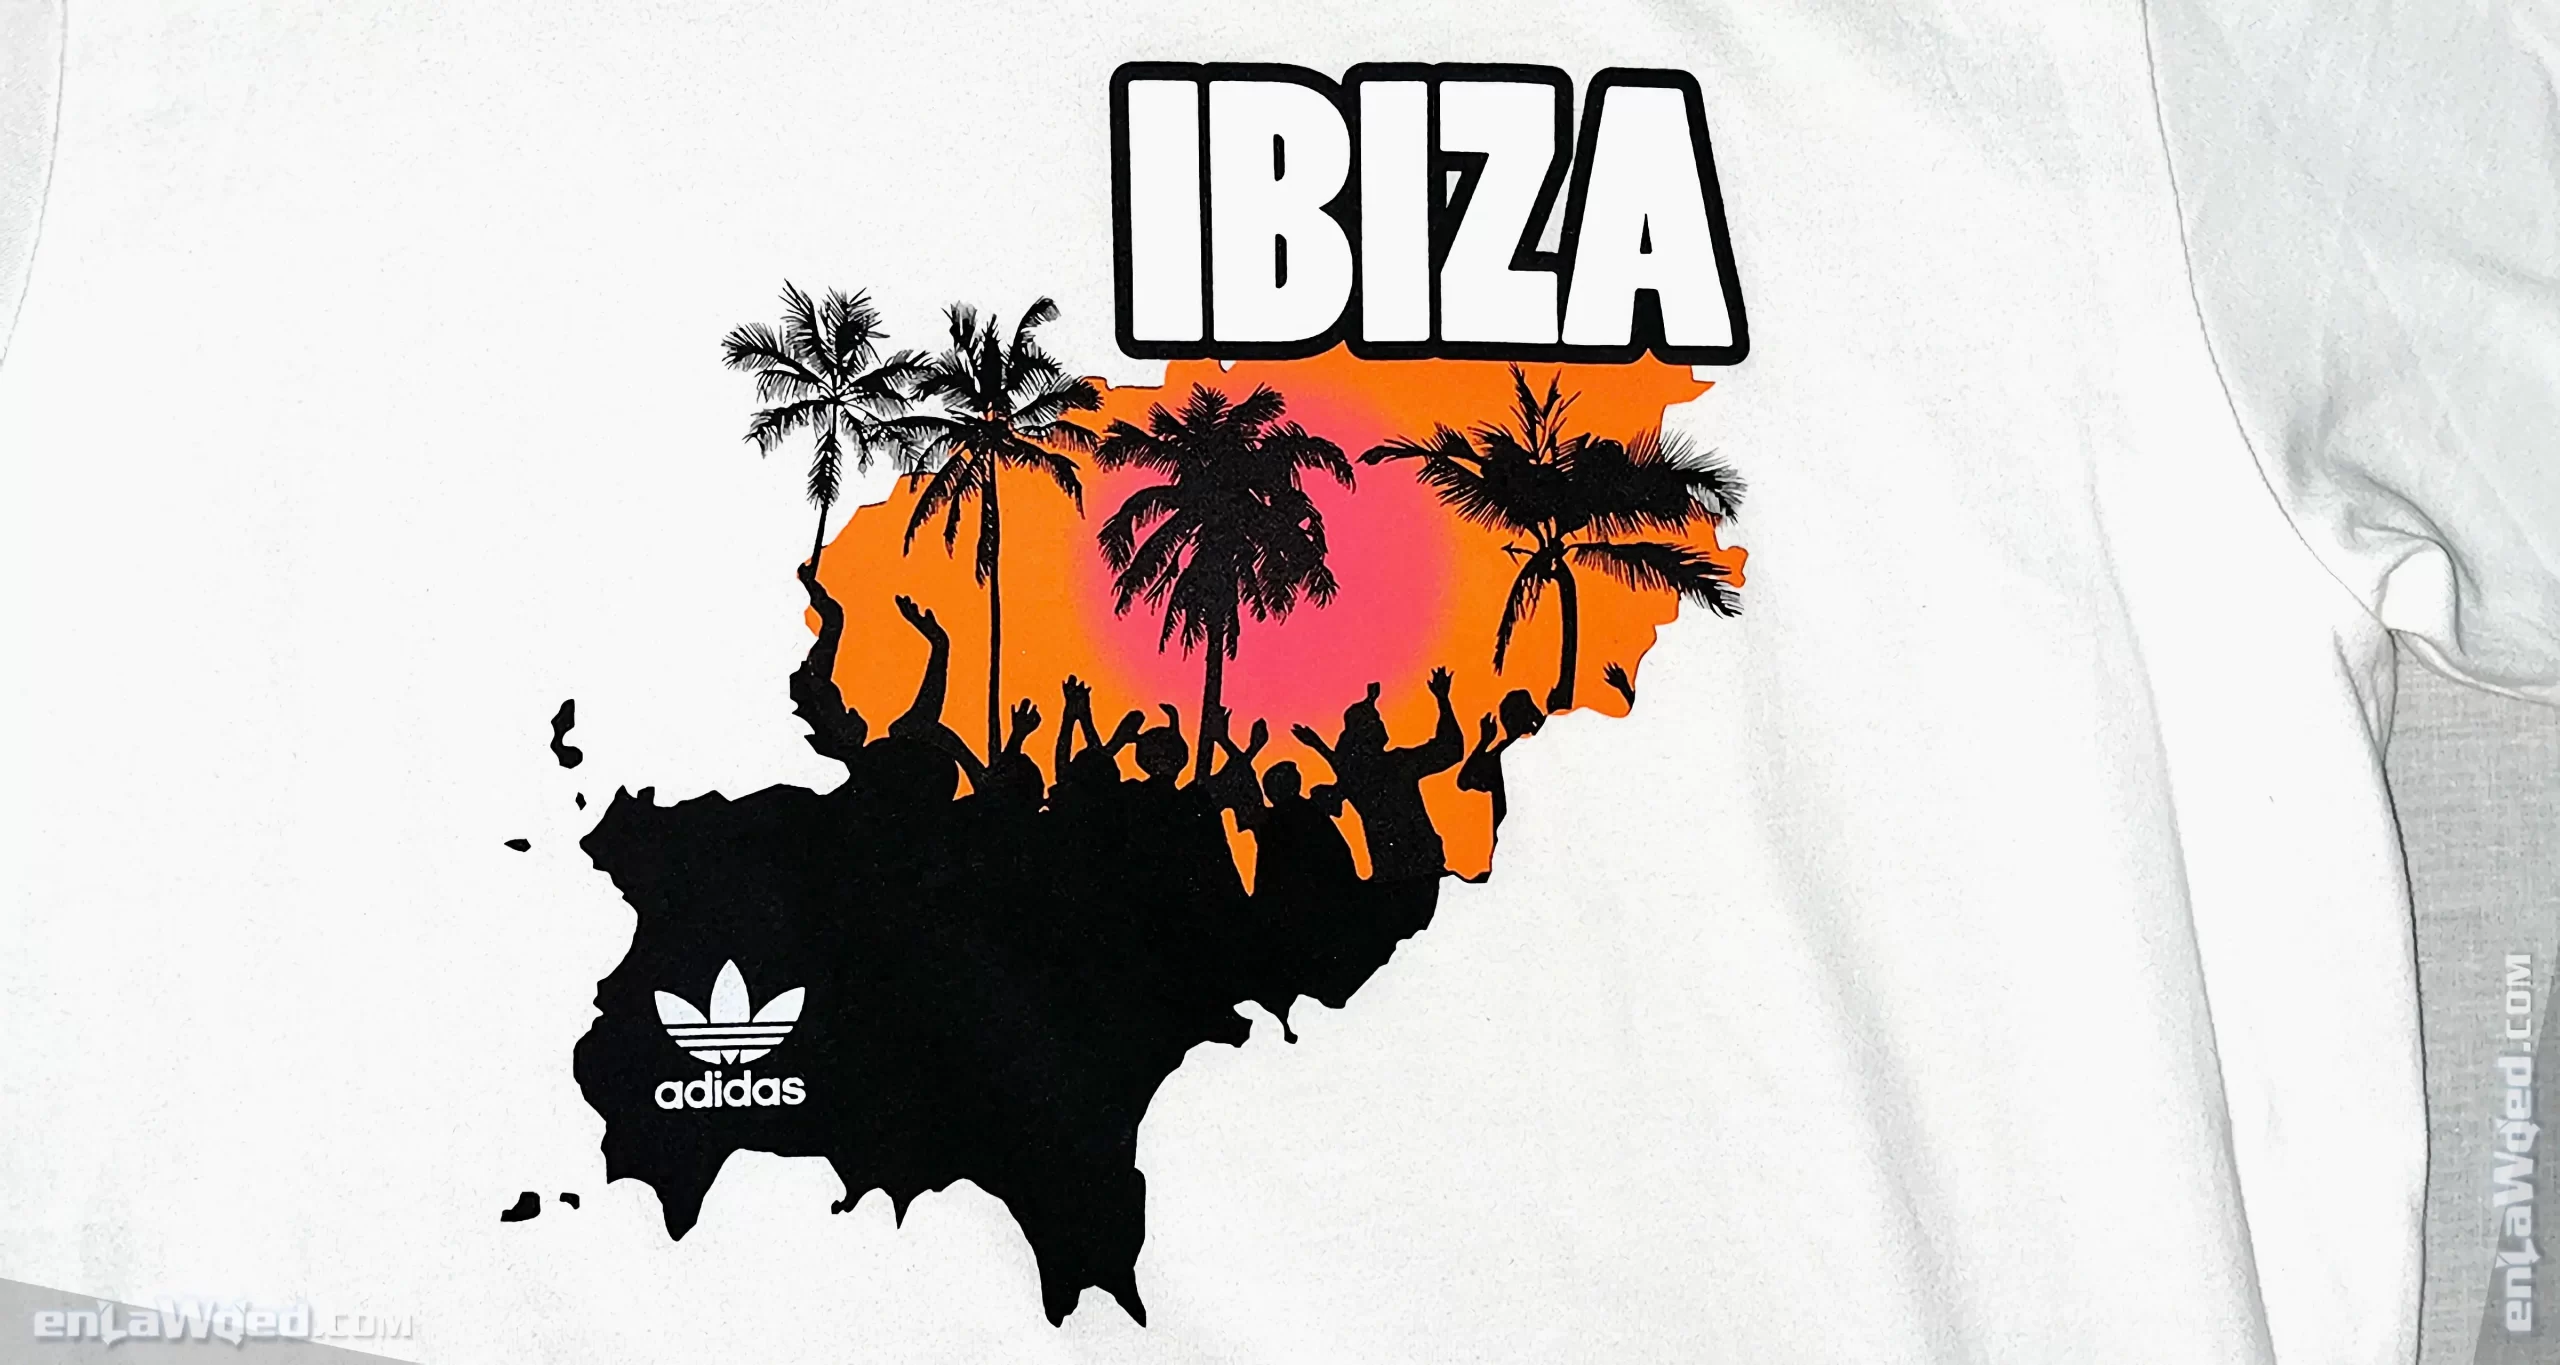 Men’s 2007 Ibiza T-Shirt by Adidas Originals: Ignite (EnLawded.com file #lmc5p7j74lp826bswr4)